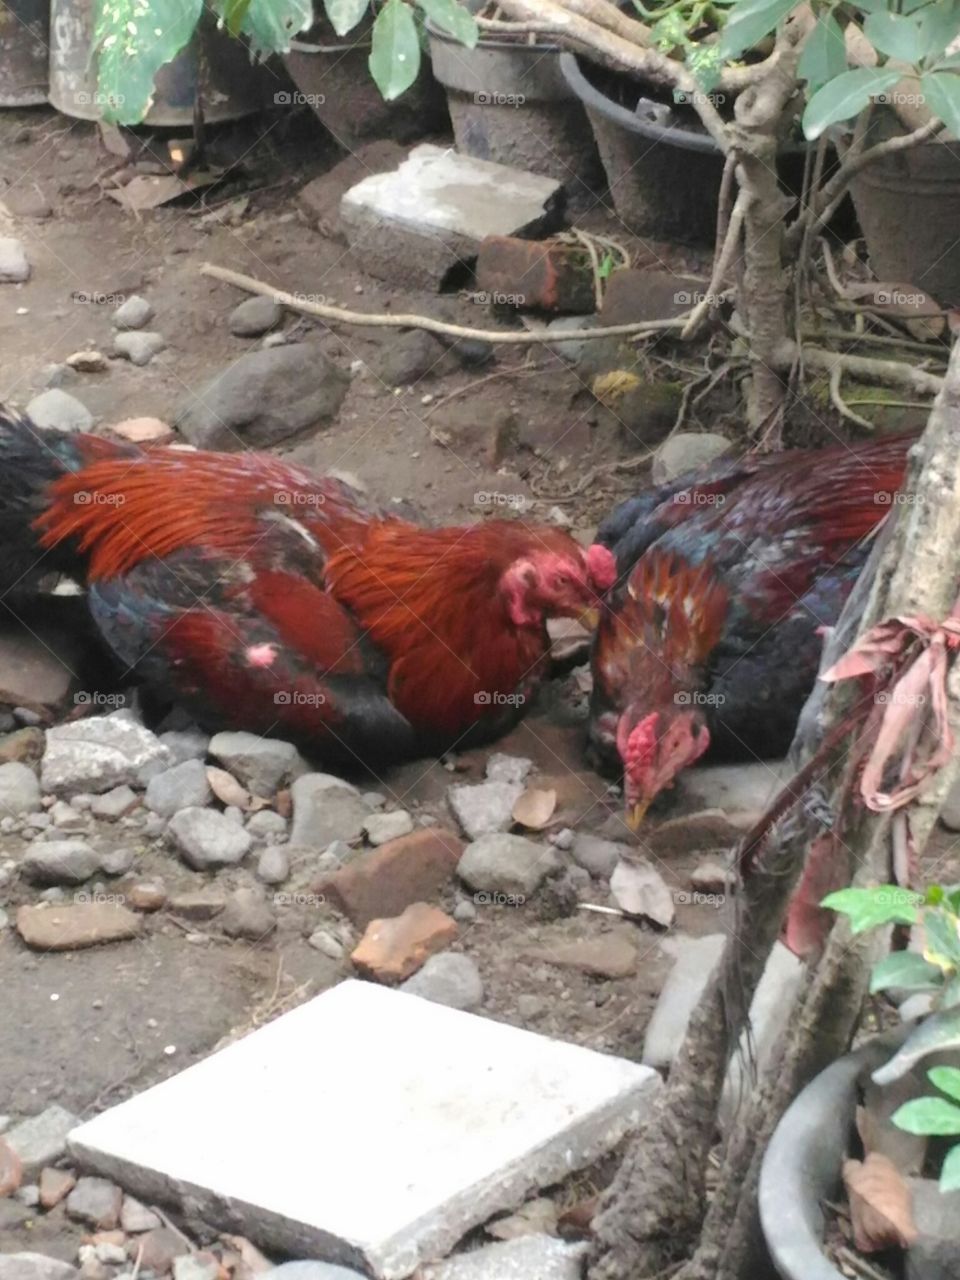 2 ayam